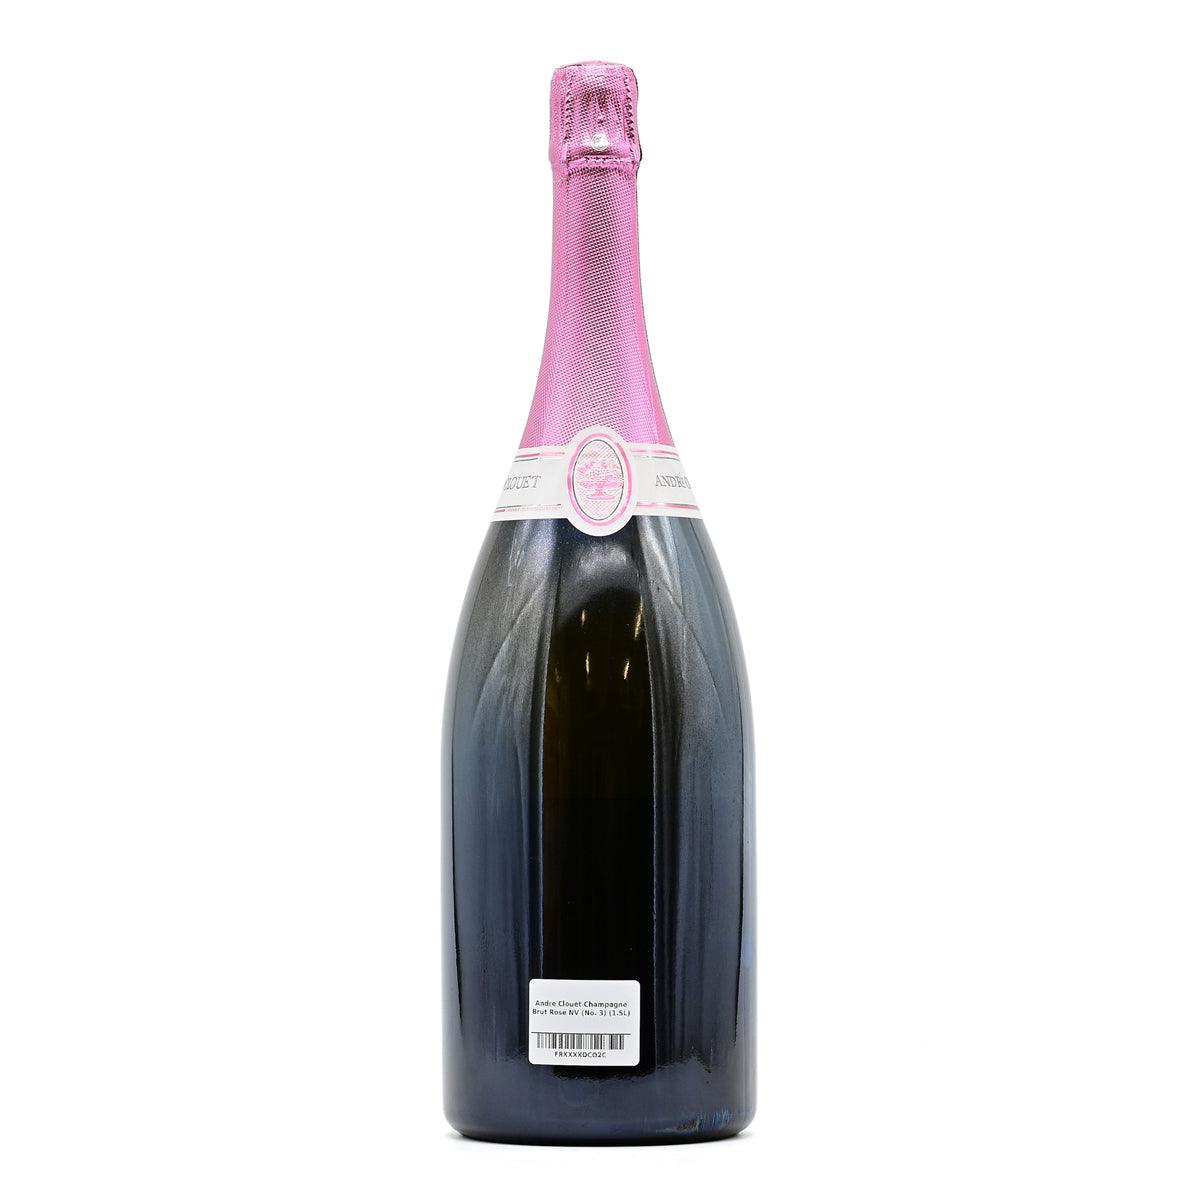 Andre Clouet Champagne Brut Rose NV (No. 3) (1.5L) - Rose Champagne - GDV Fine Wines® - 1500ml, Bouzy, Champagne, Champagne Andre Clouet, France, JS93, Non-Vintage, Rose Champagne, WA93, Wine Product